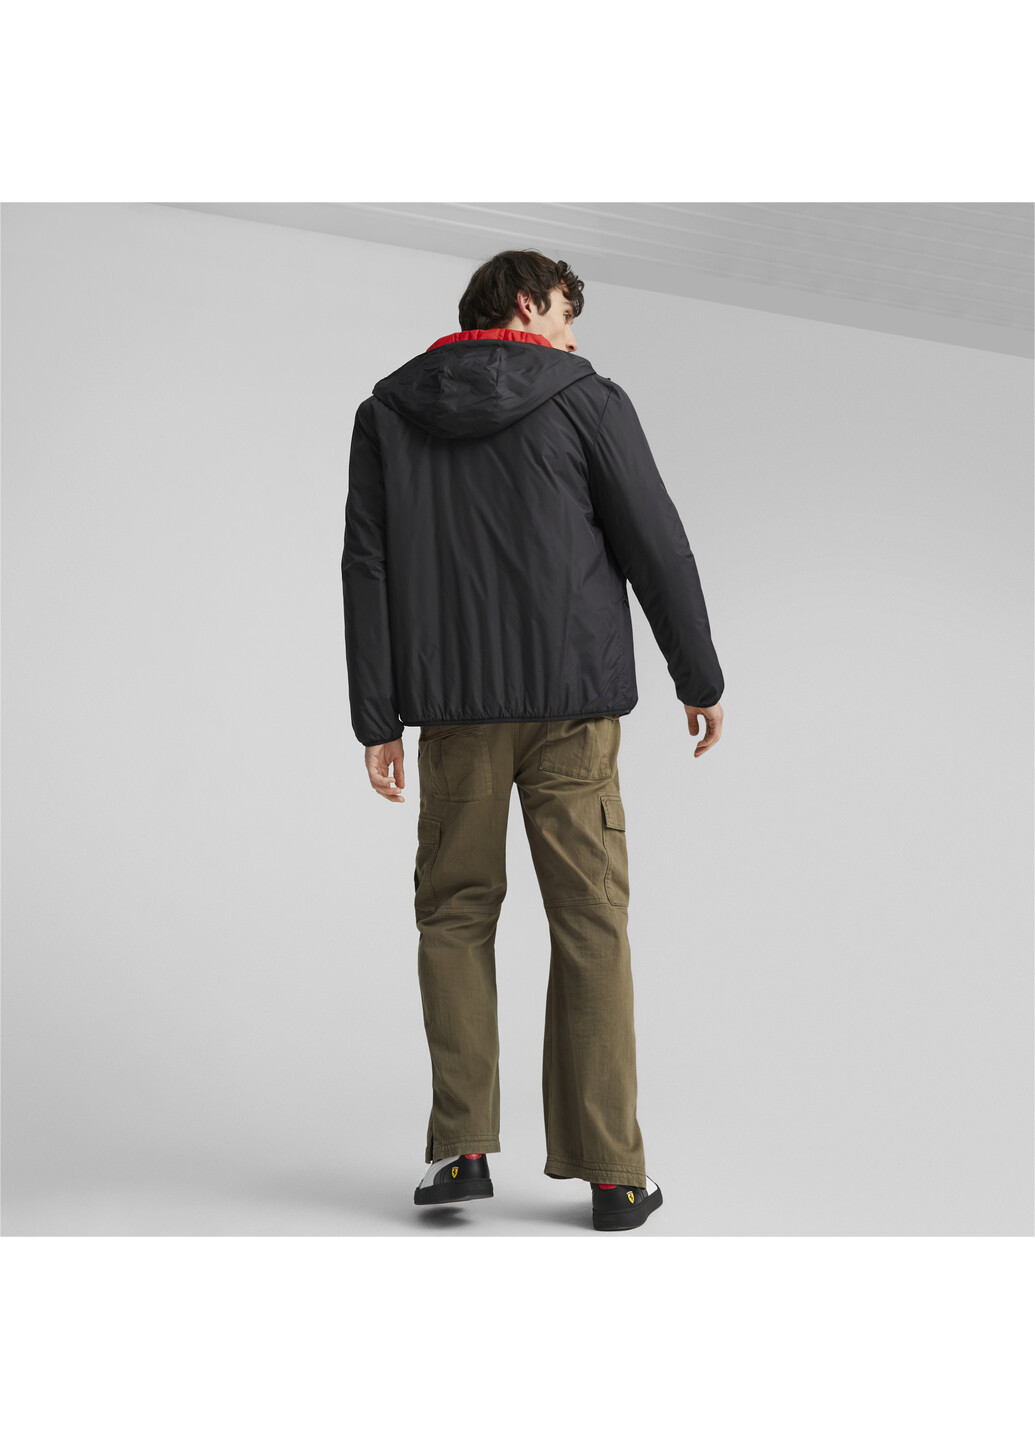 Черная демисезонная куртка scuderia ferrari style reversable padded jacket Puma